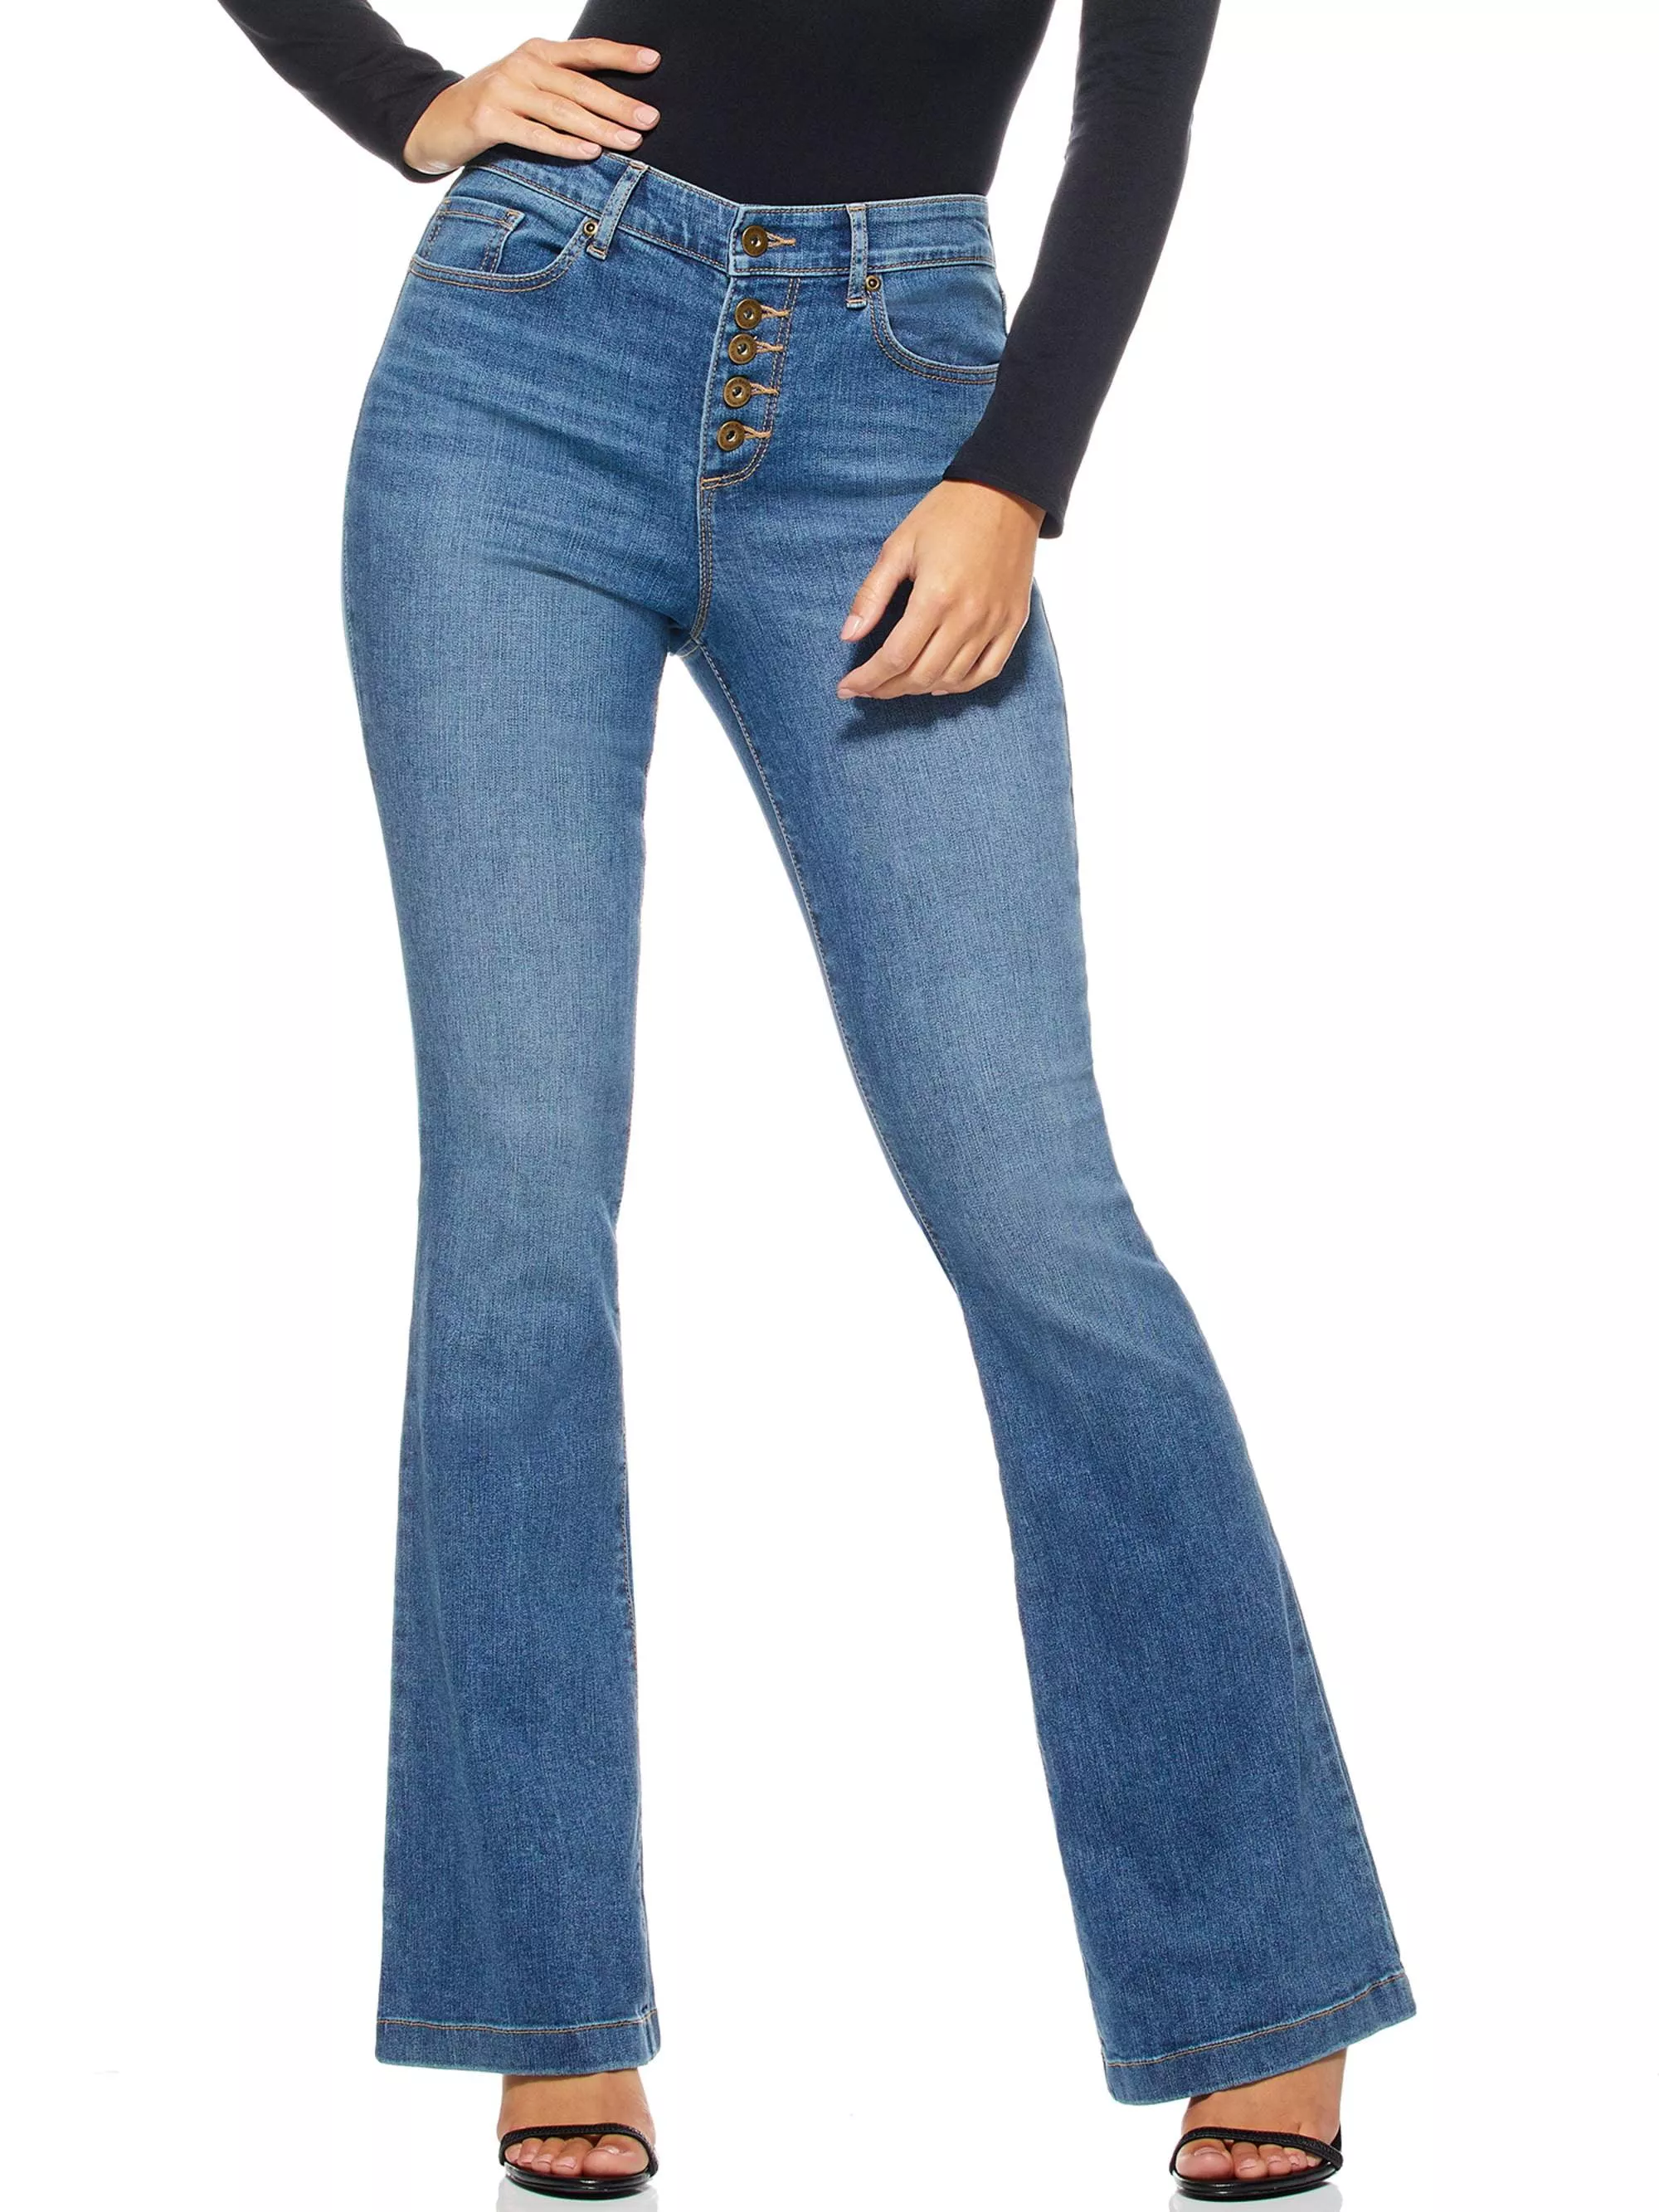 Sofia Jeans by Sofia Vergara Women's High Rise Skinny Kick Bootcut Jeans 